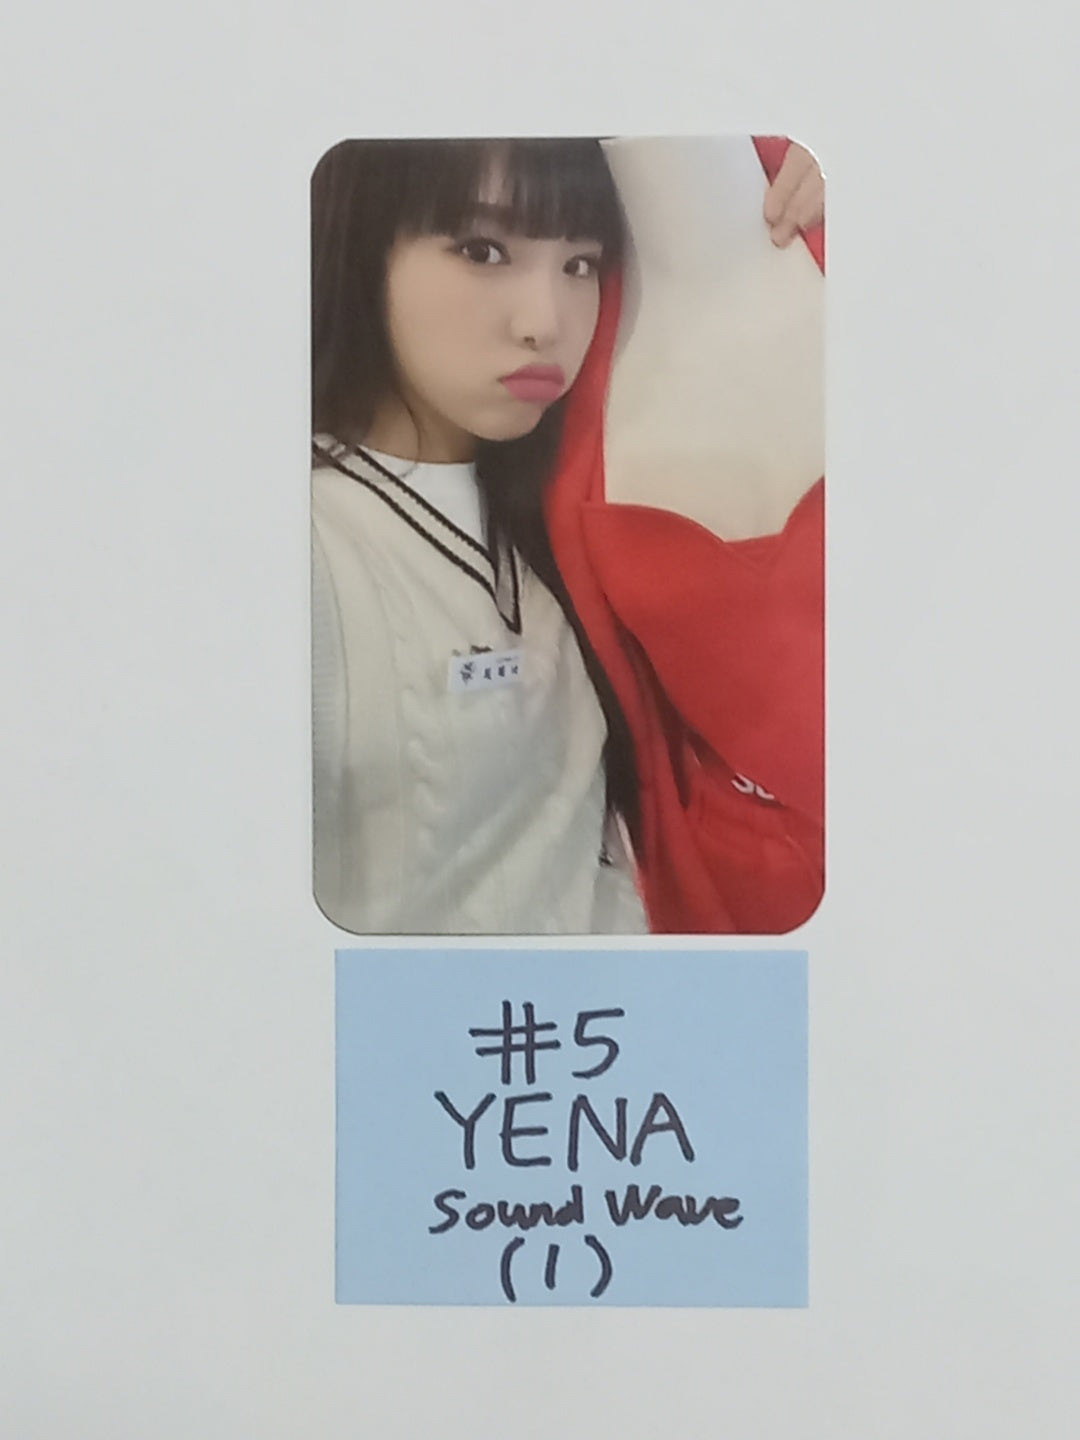 YENA「Yena Day Cafe」サウンドウェーブイベントフォトカード